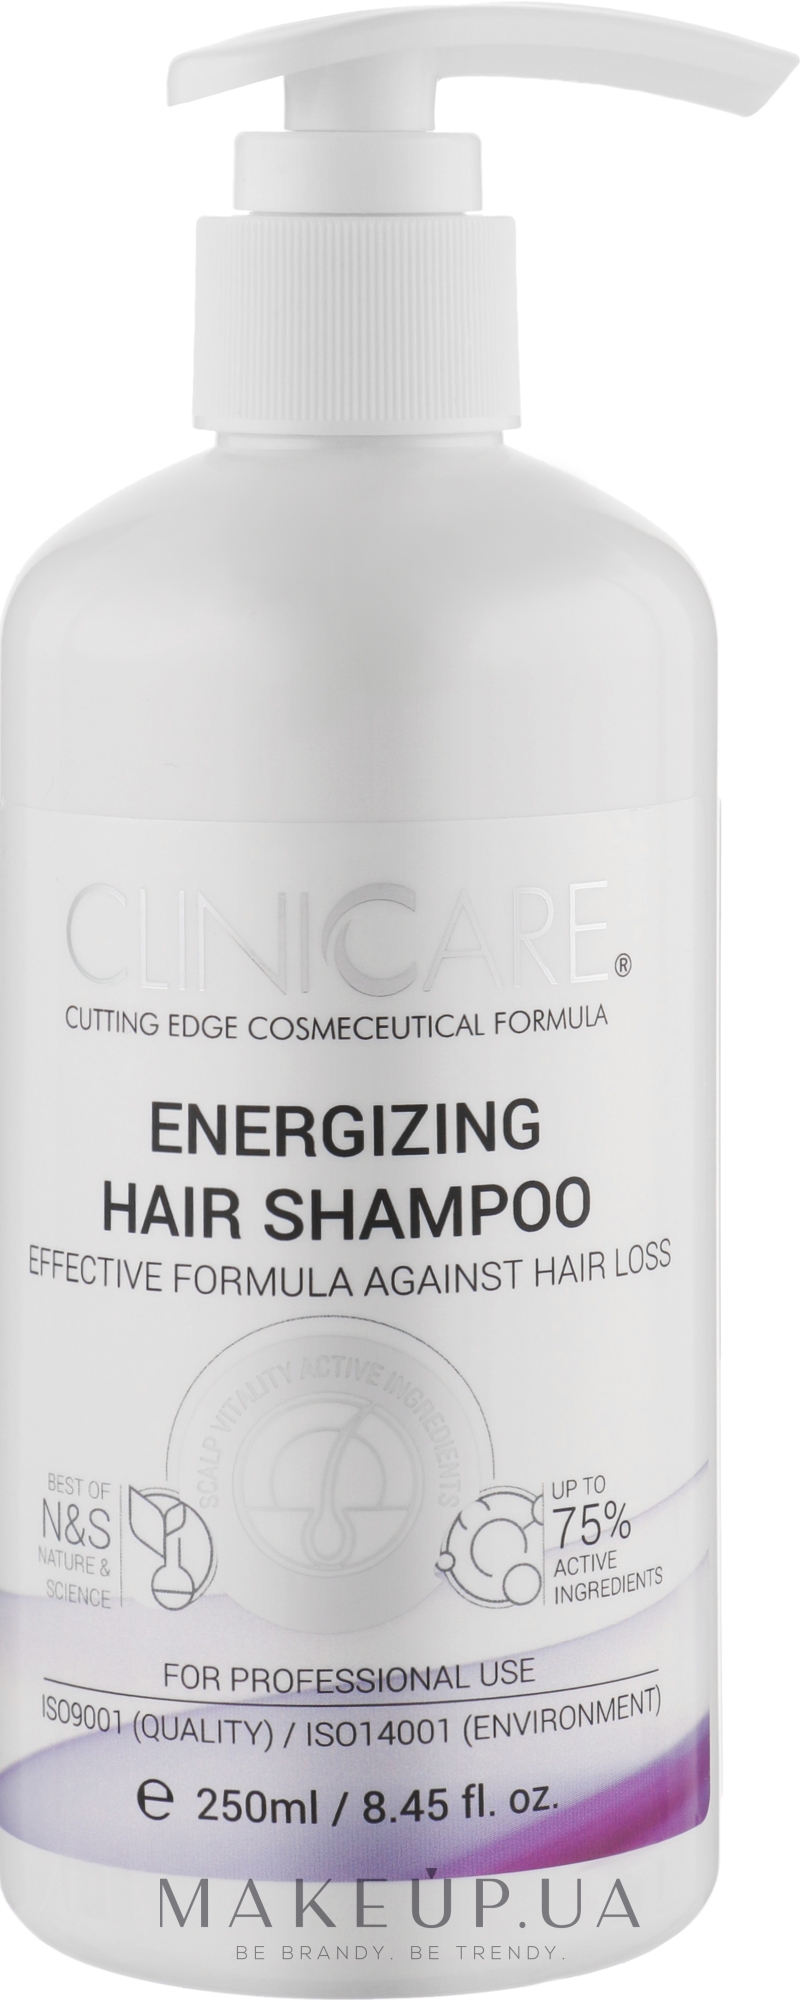 Енергетичний шампунь для волосся - ClinicCare Energizing Hair Shampoo — фото 250ml